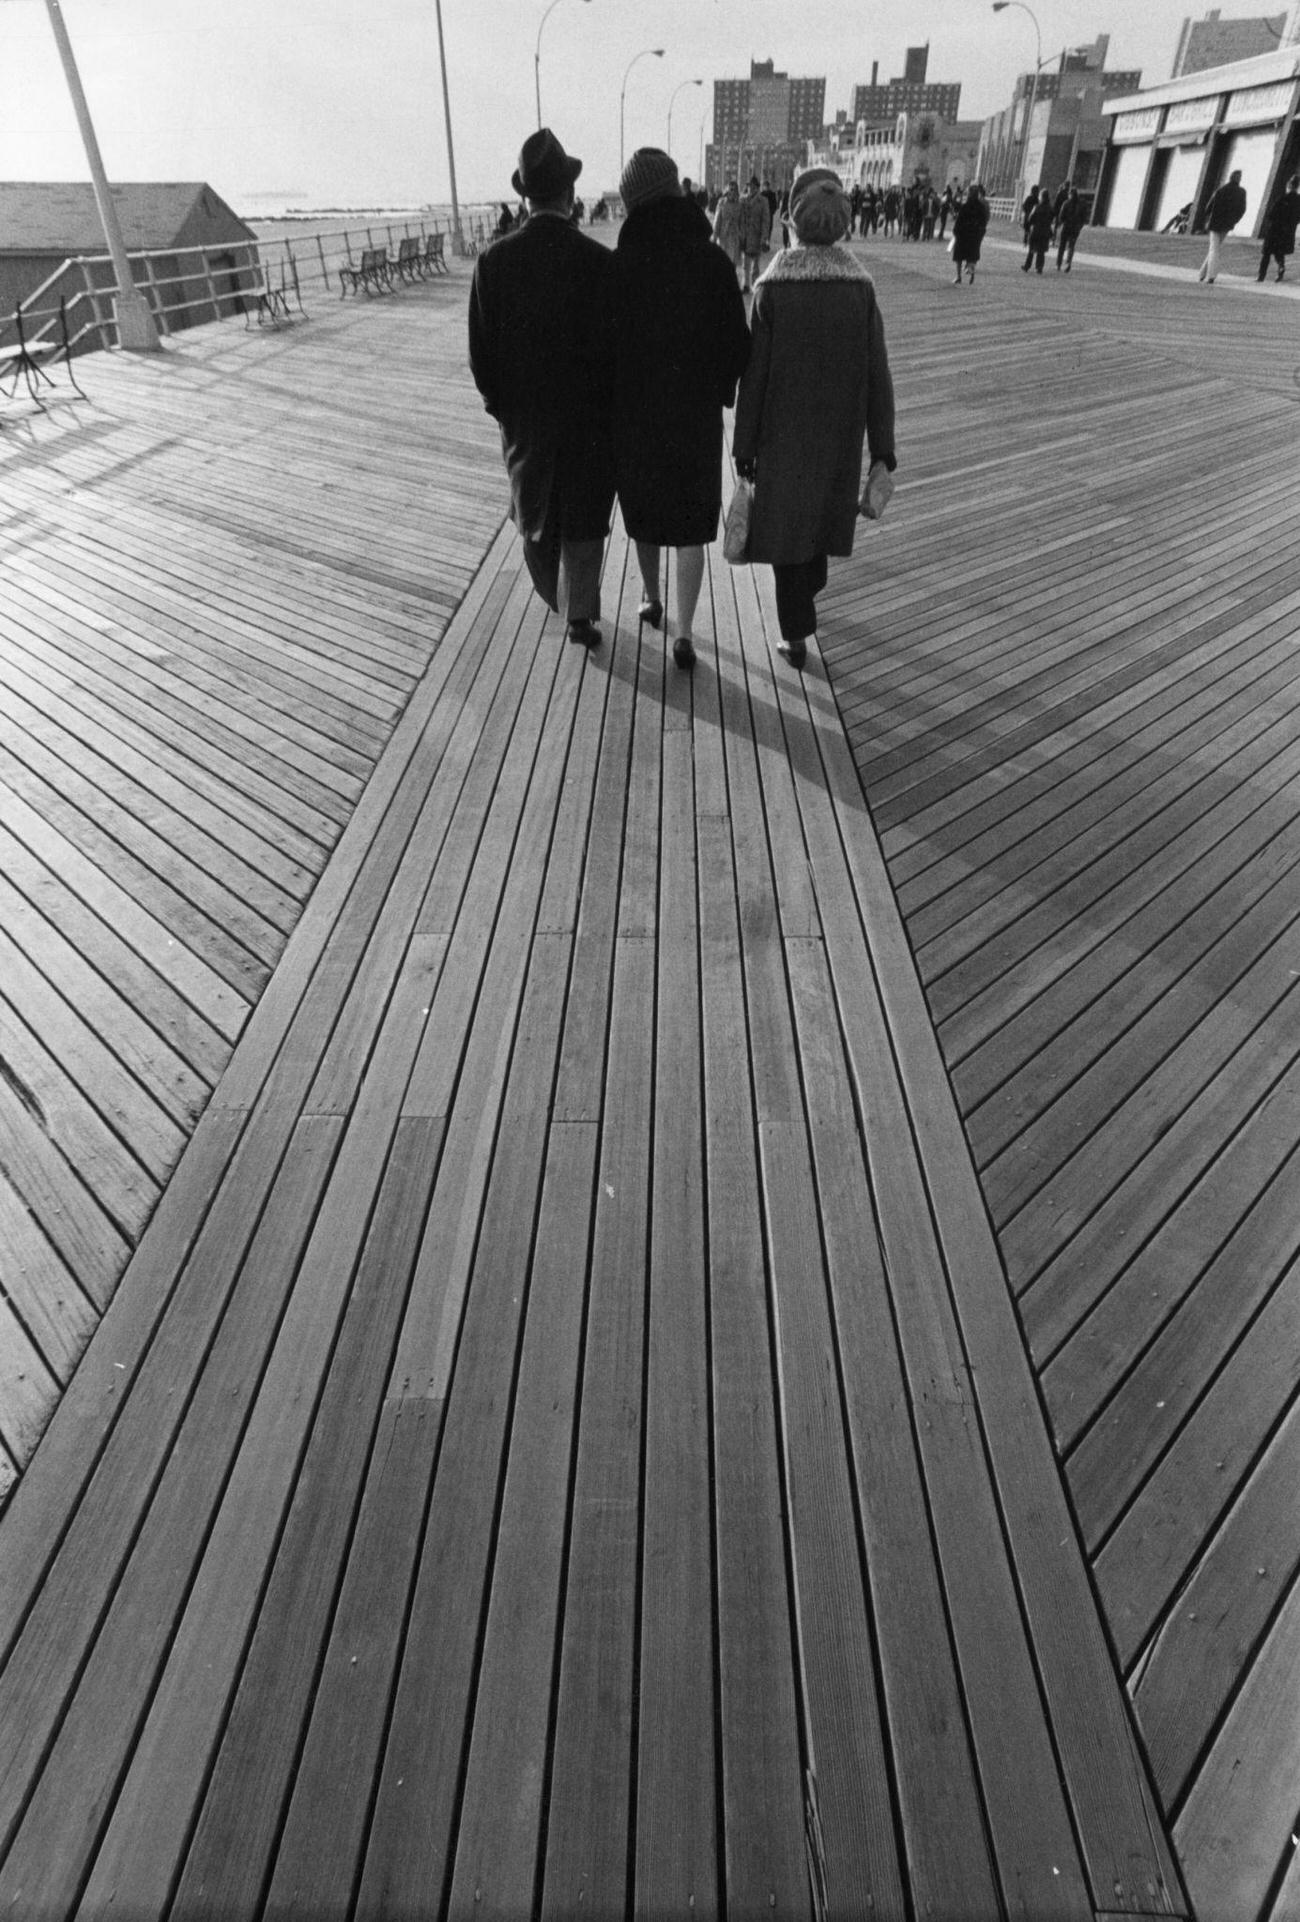 Three People Strolling On The Coney Island Boardwalk, 1972